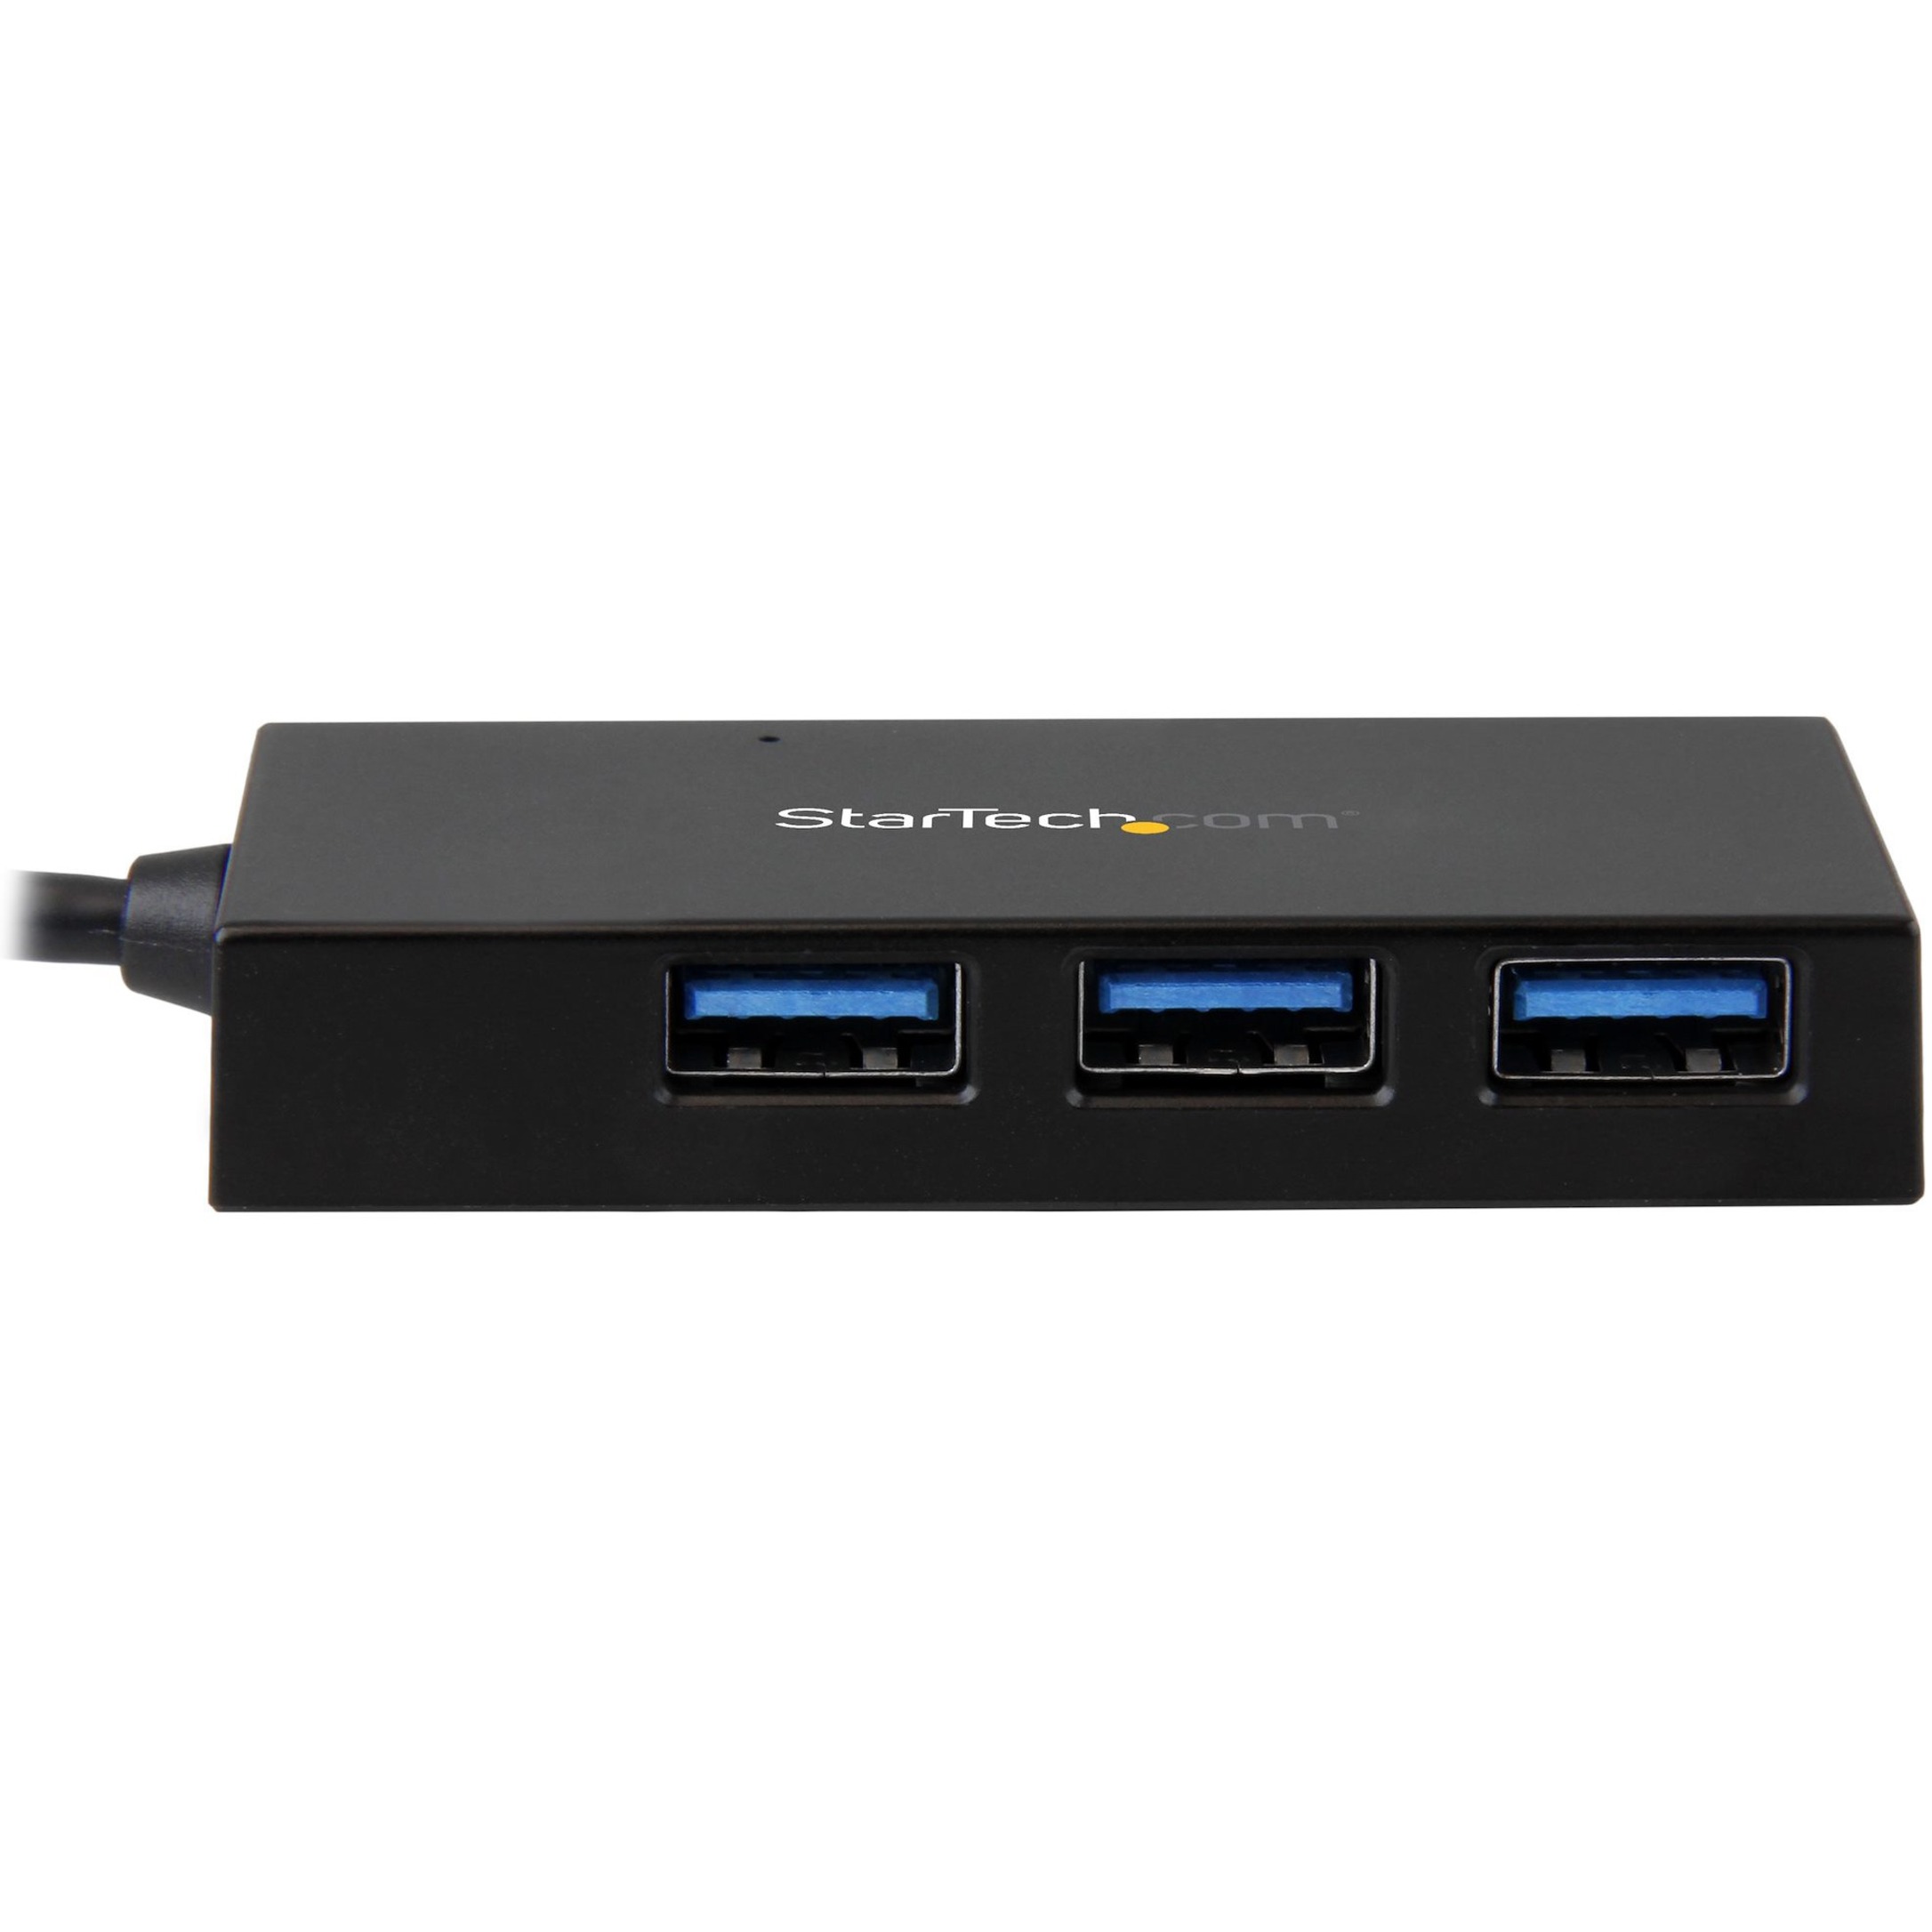 StarTech.com USB C Hub �����" 4 Port USB-C to USB-A (3x) and USB-C (1x) �����" with Power Adapter �����" USB Type C Hub �����" Port Expander - image 3 of 7